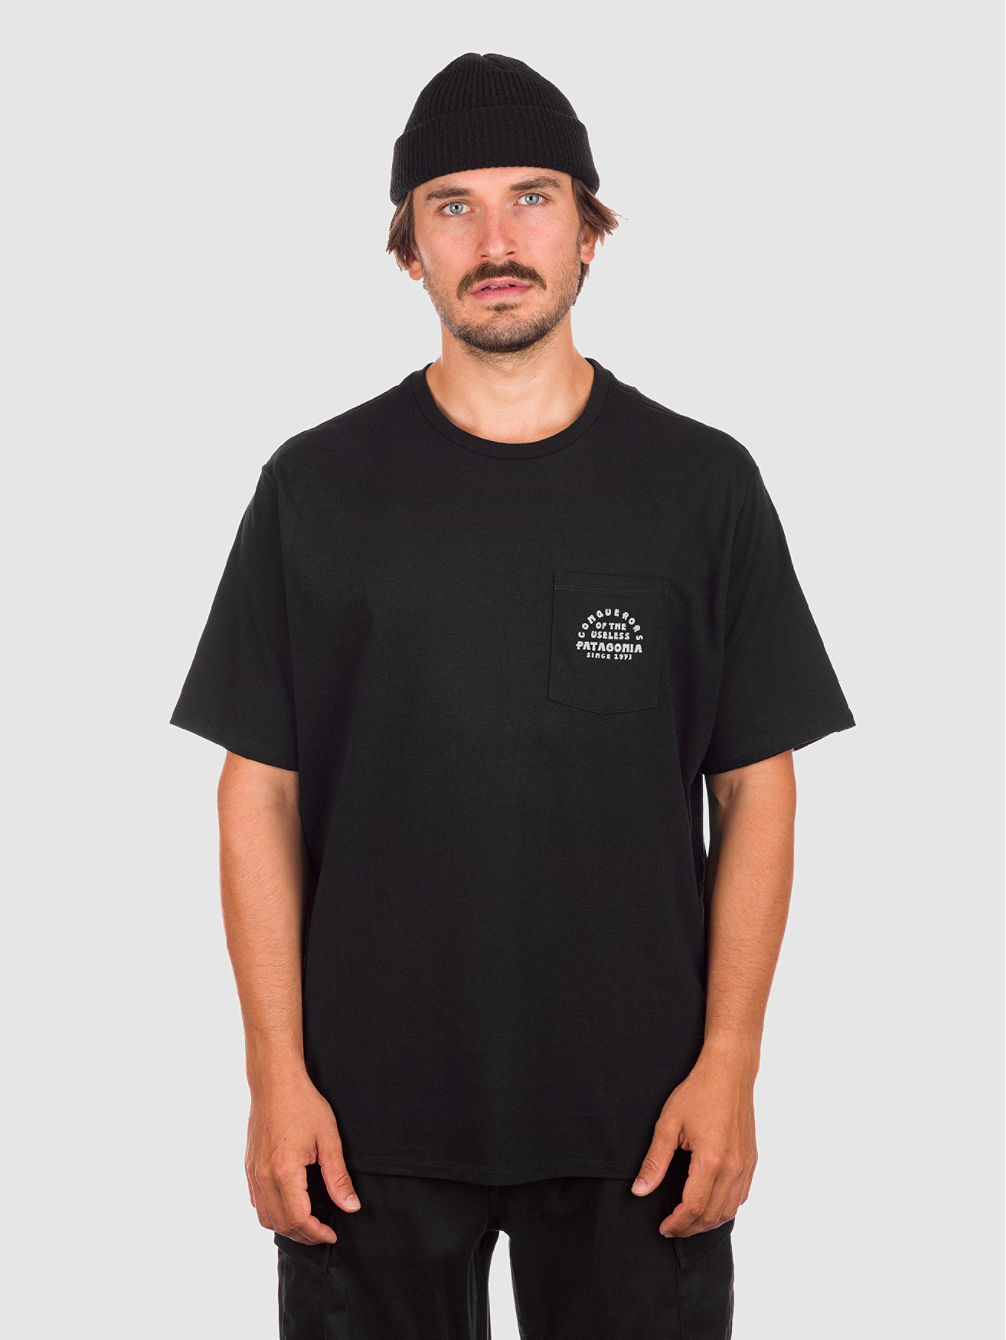 C.O.T.U. Fins Pocket Responsibili T-shirt